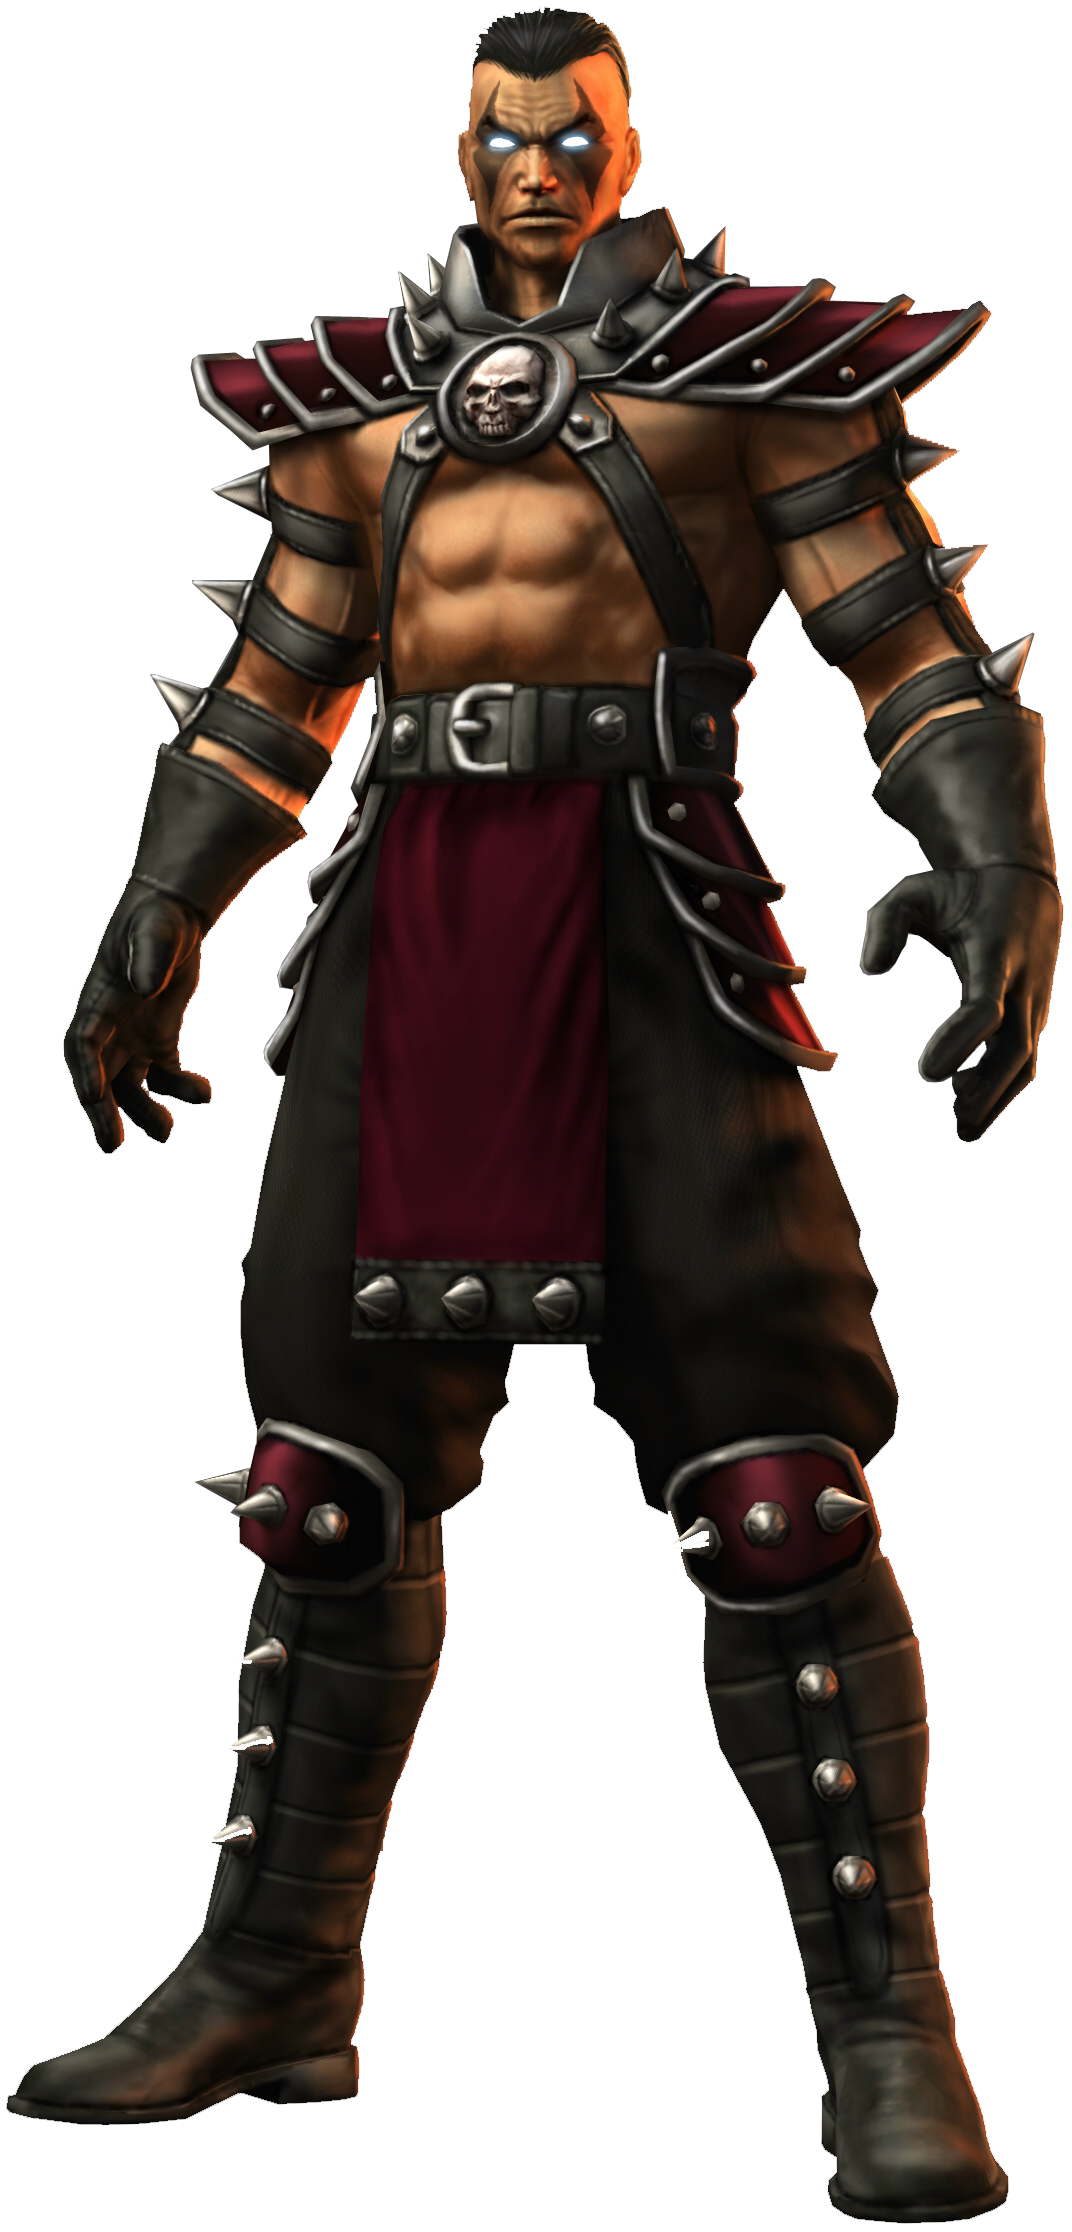 Reiko | Mortal Kombat Wiki | Fandom